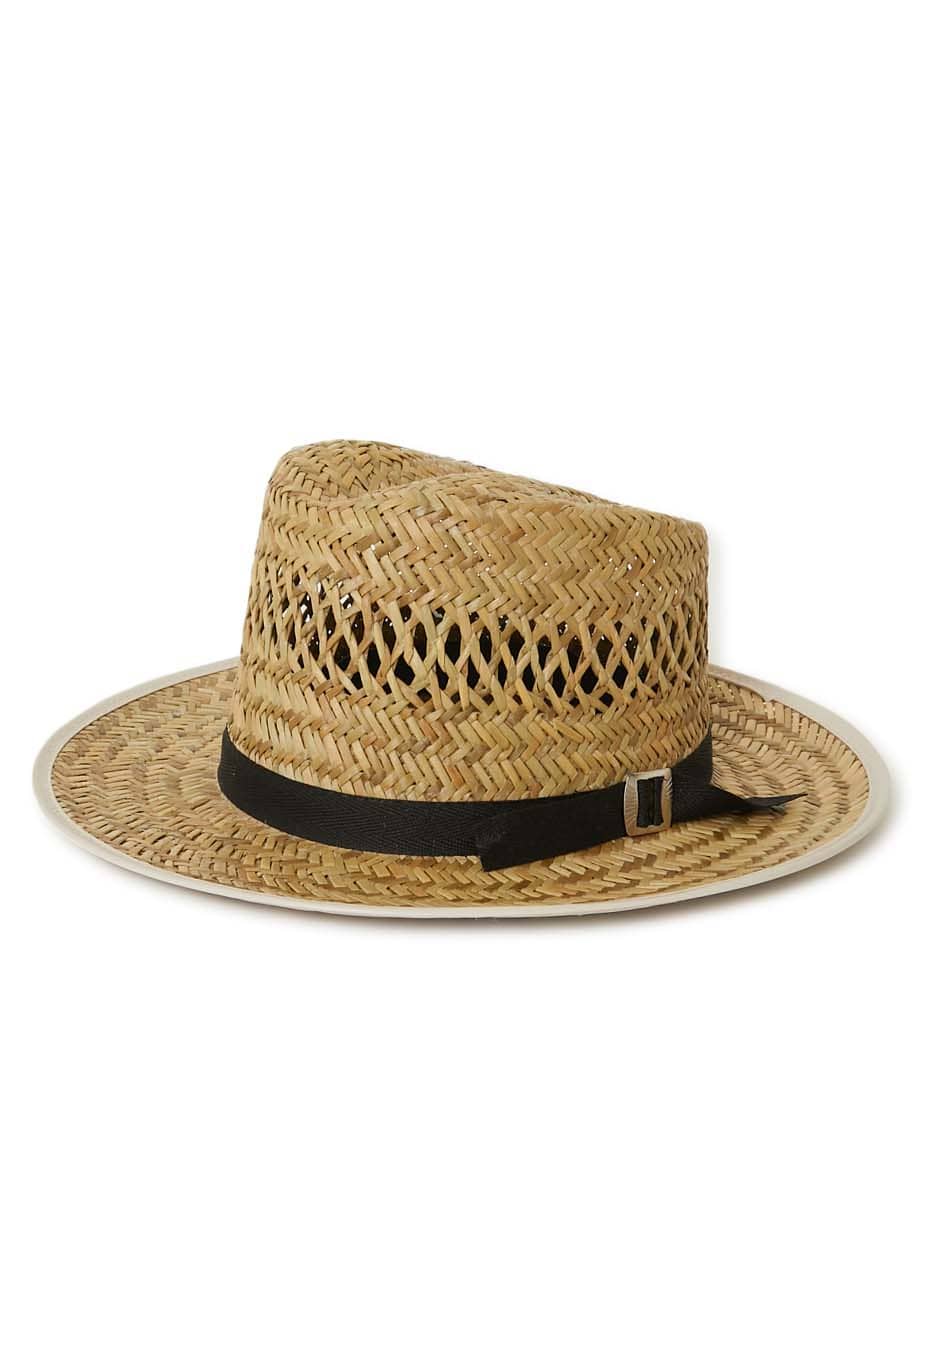 SUNSET STRAW HATS ホースシュークラウン3/4 Black Hatband Vented Seagrass